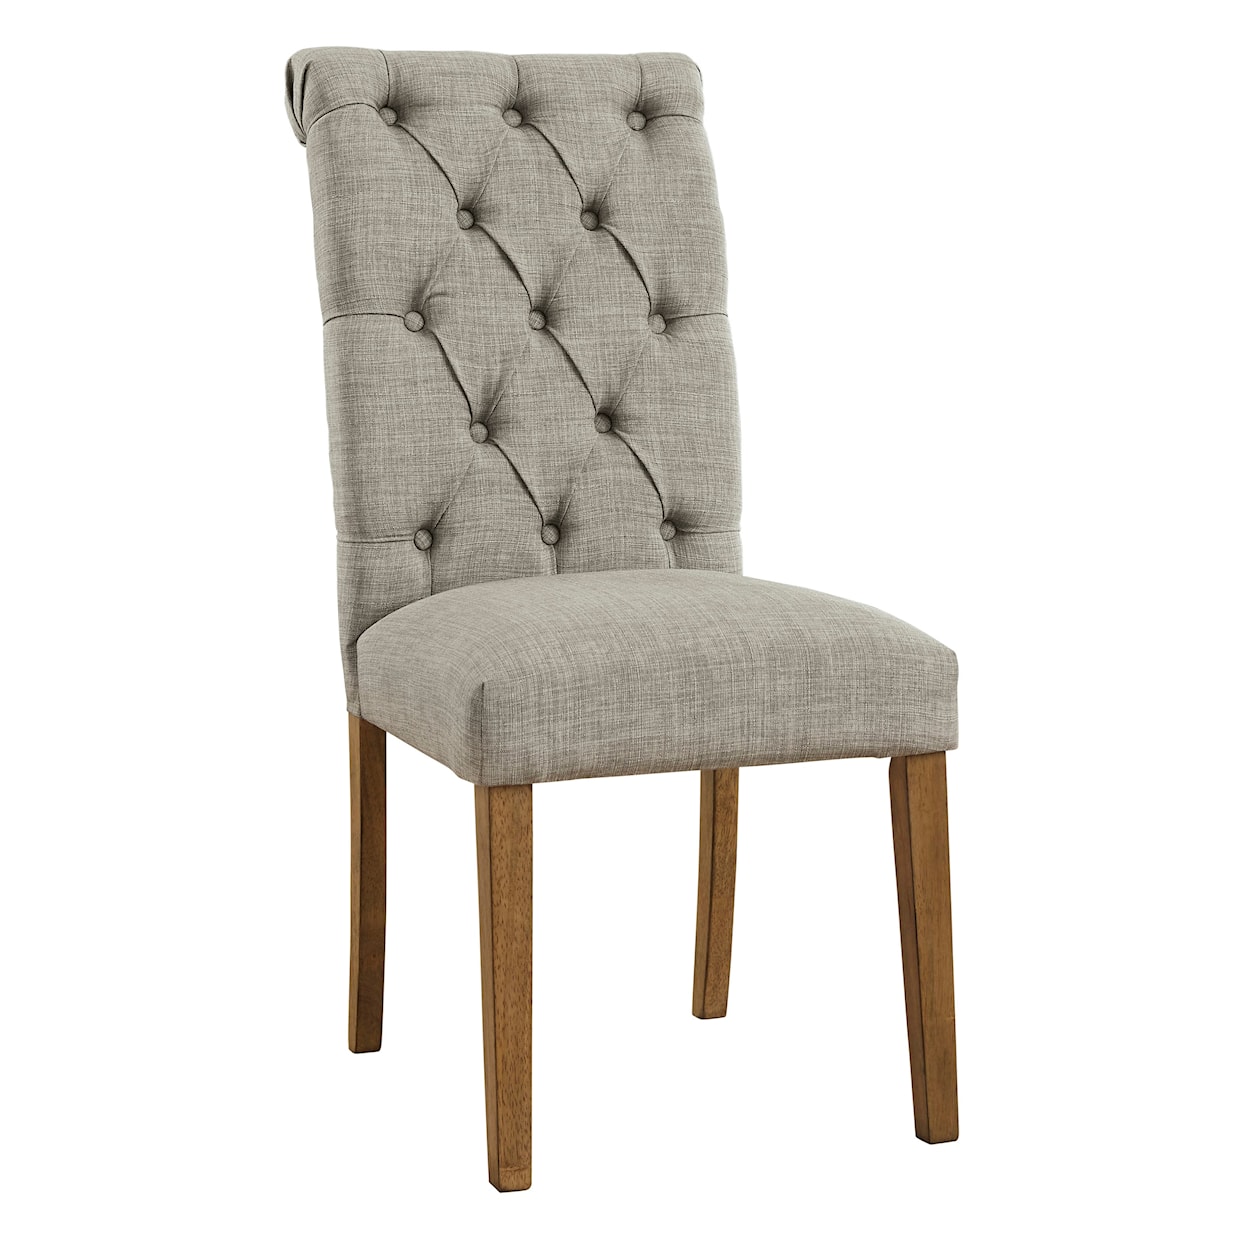 Ashley Furniture Signature Design Harvina Dining Chair